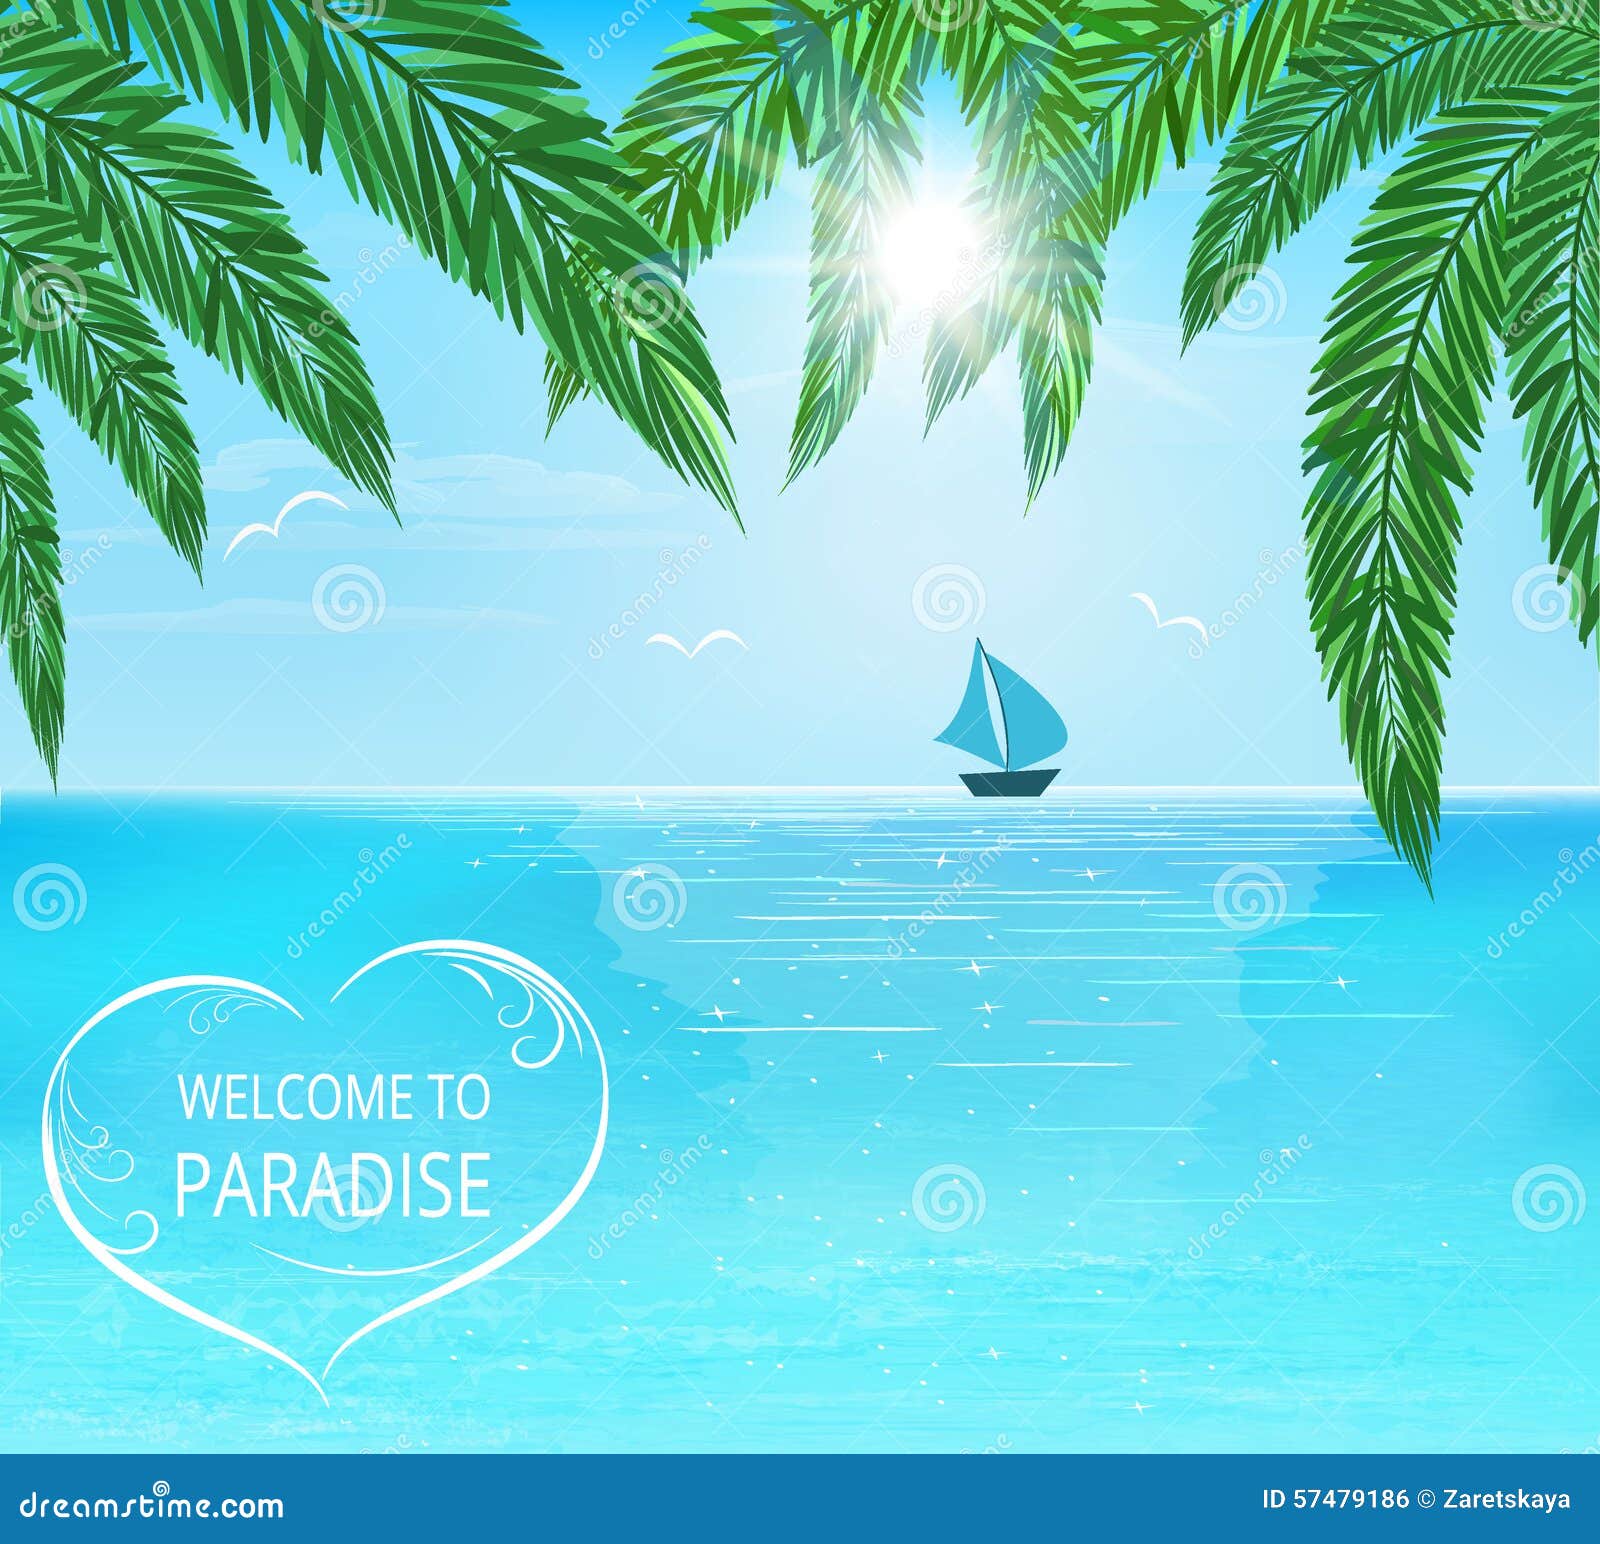 Sea, sailboard on horizon, palm leaves on foreground, sun with sunbeam 